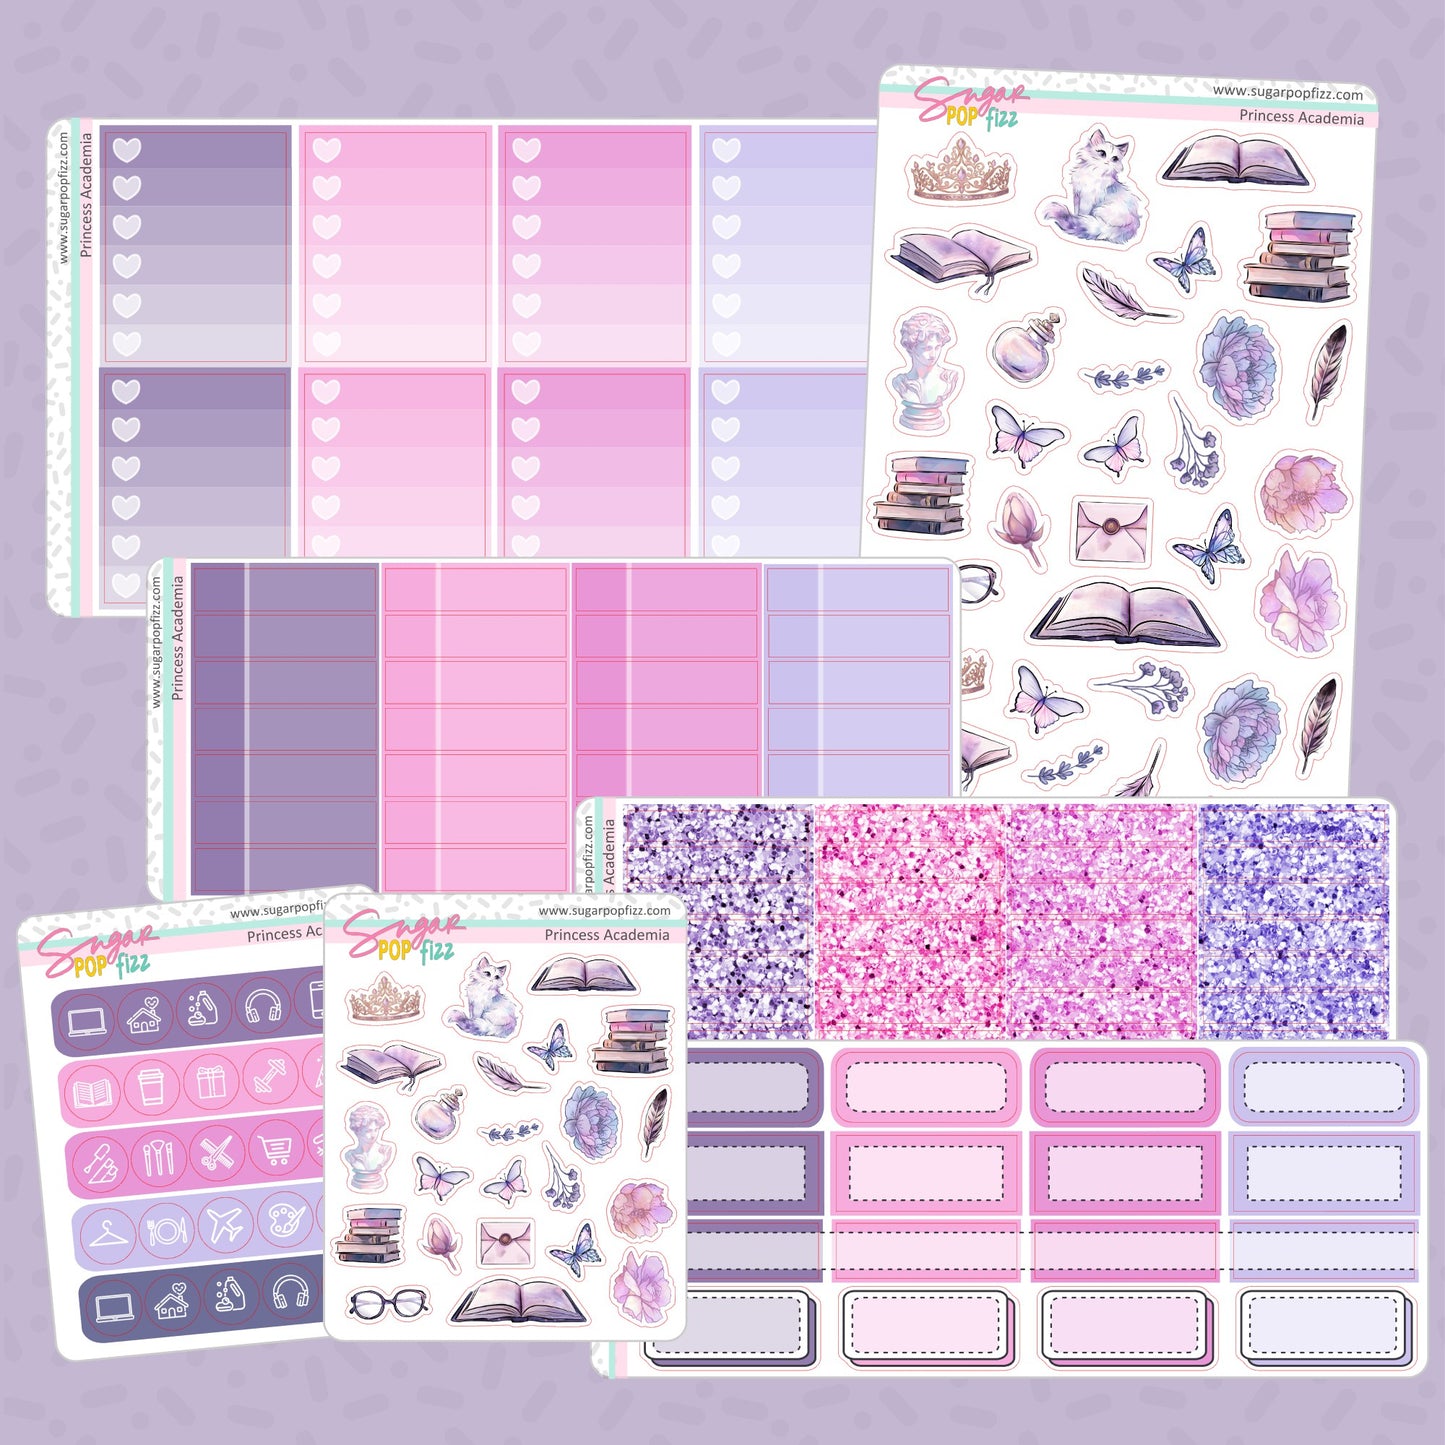 Princess Academia Weekly Kit Add-ons